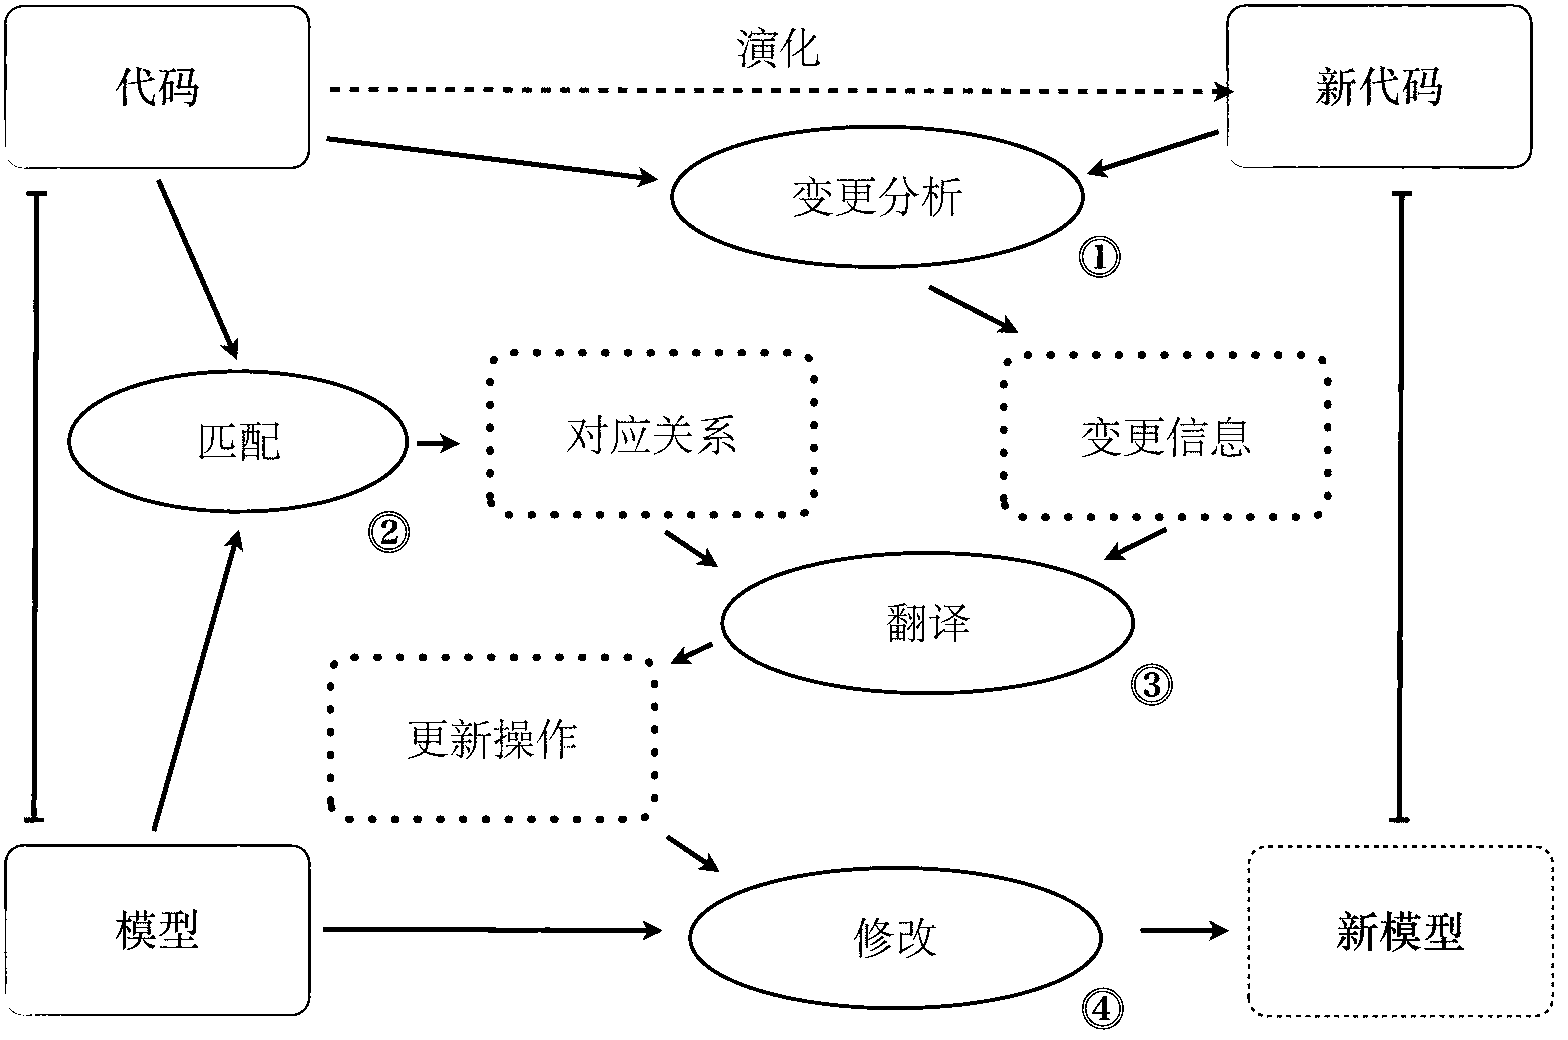 Software model synchronization method based on code modification